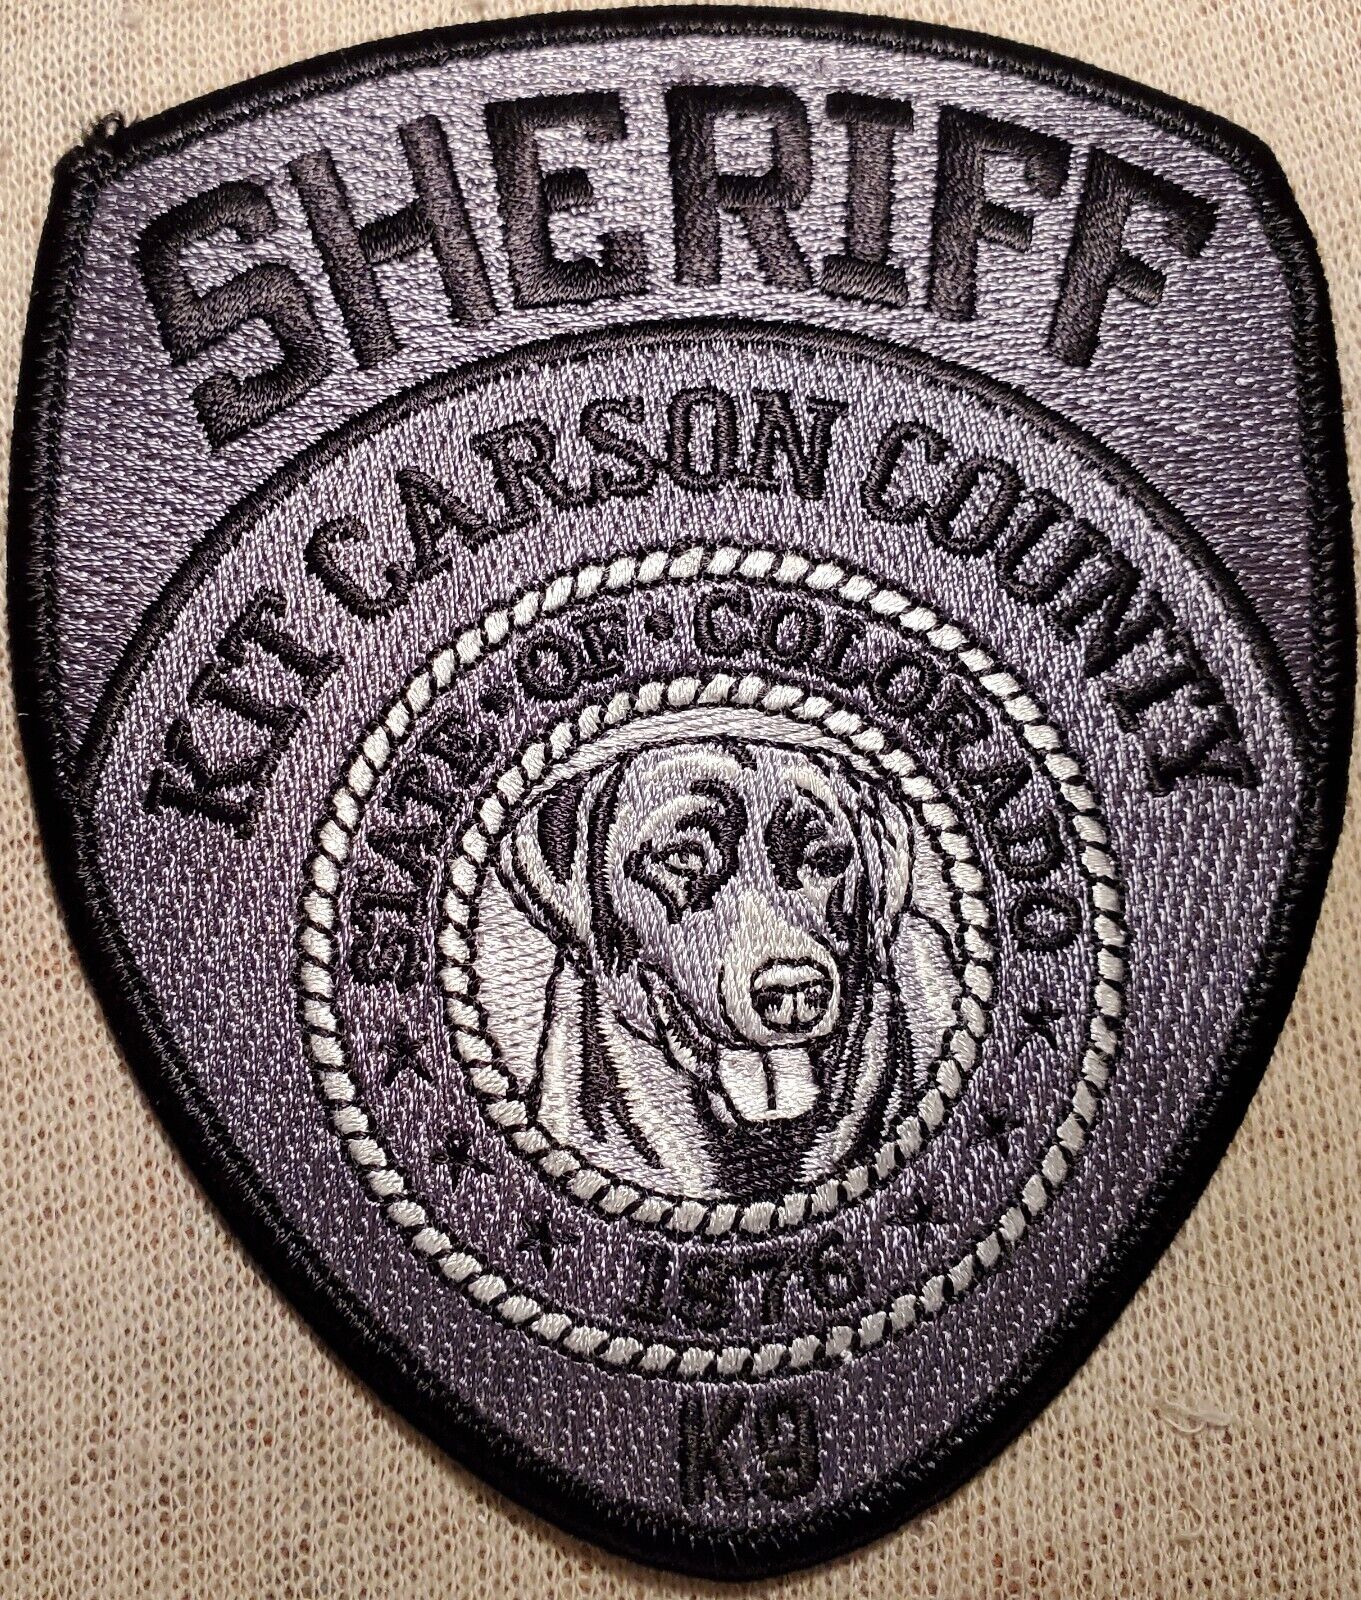 CO Kit Carson County Colorado K-9 Unit Sheriff Shoulder Patch